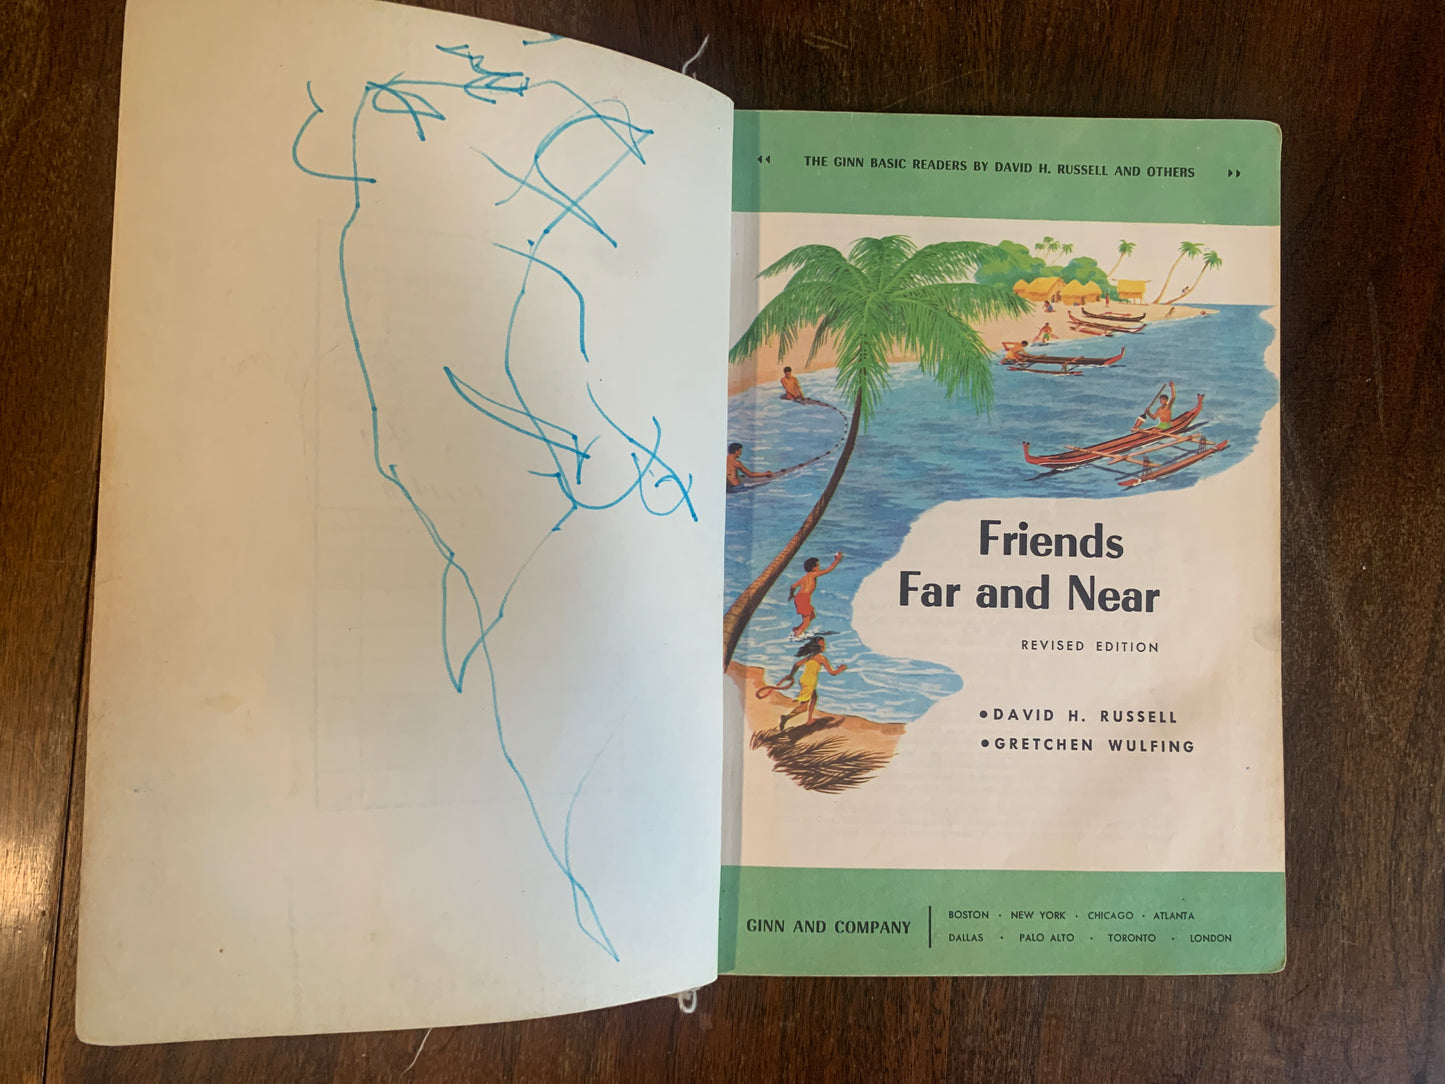 Friends Far and Near: The Ginn Basic Readers